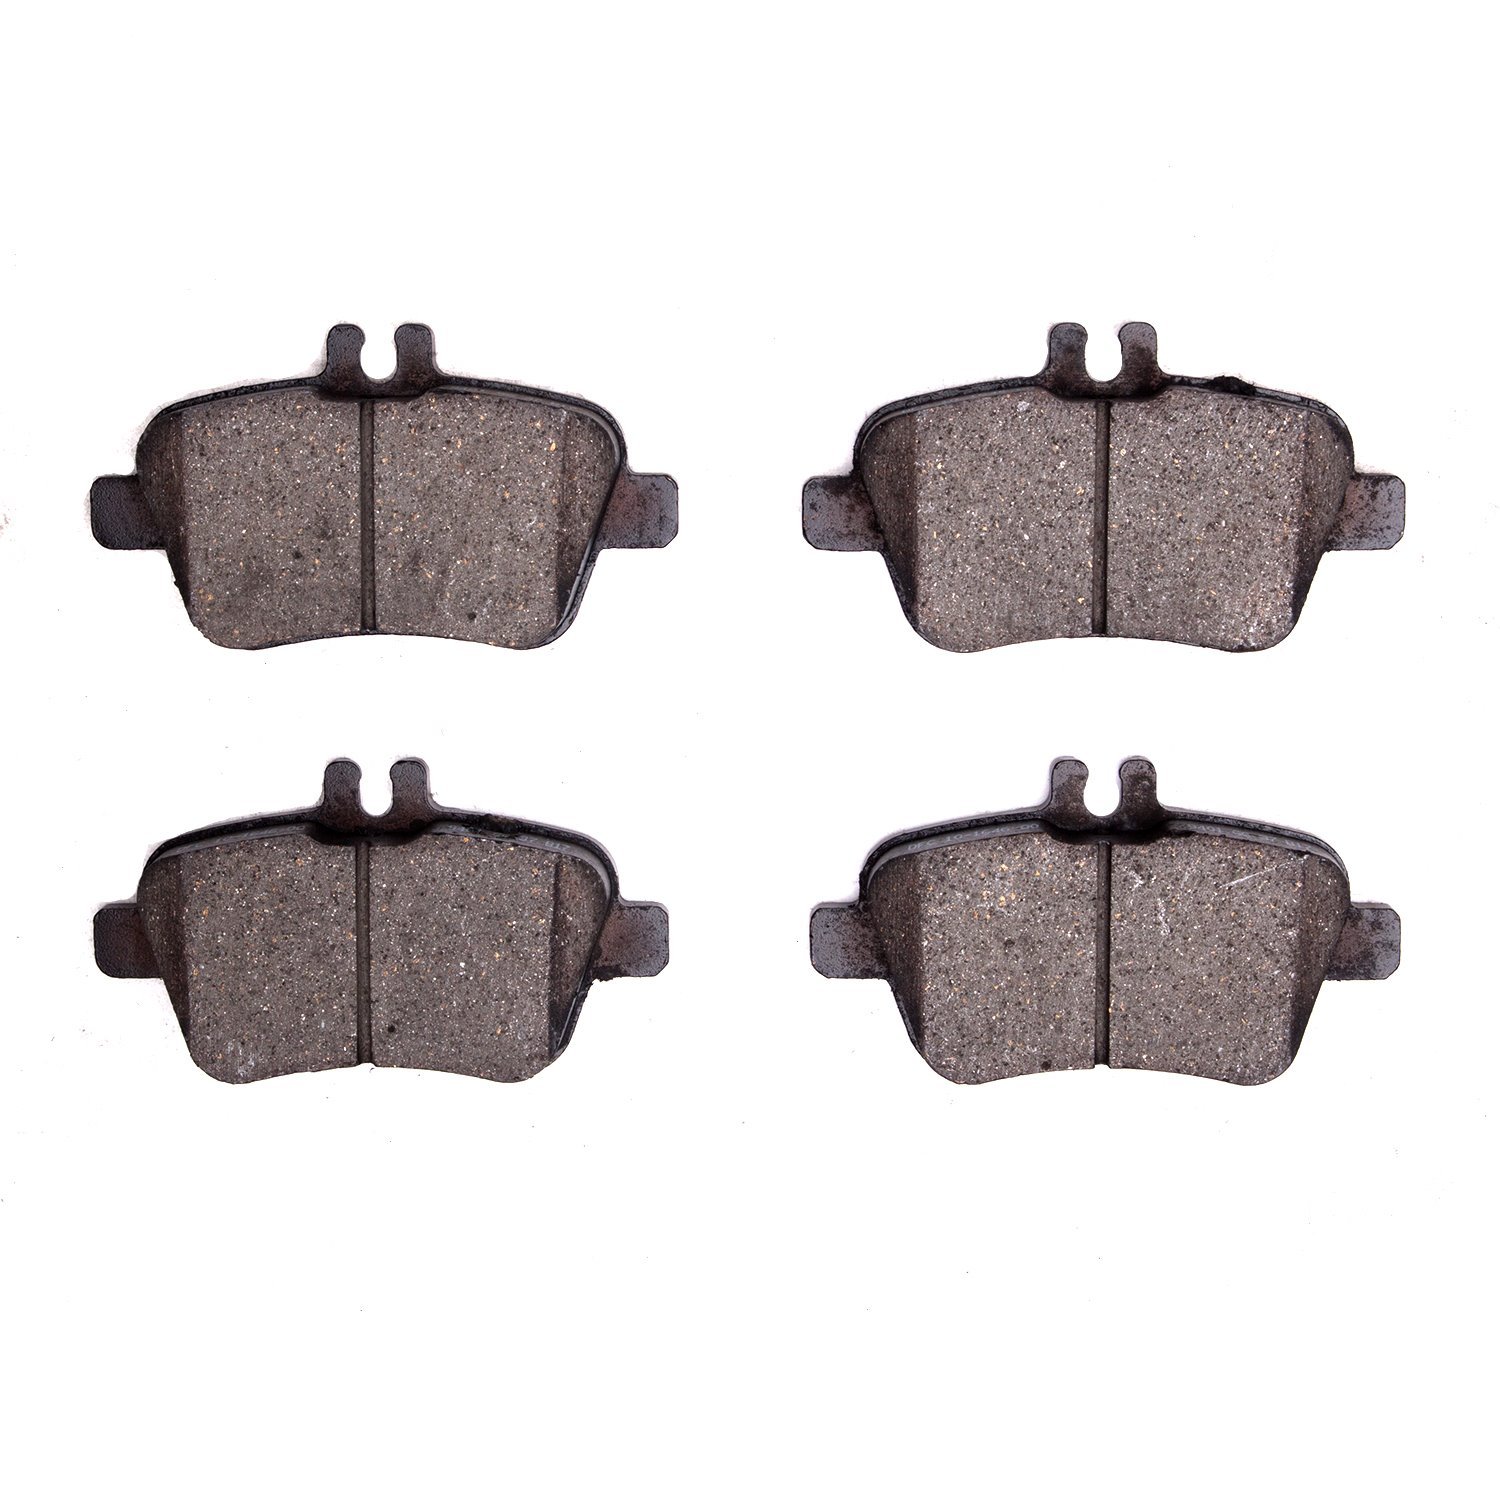 Semi-Metallic Brake Pads, 2012-2020 Fits Multiple Makes/Models, Position: Rear